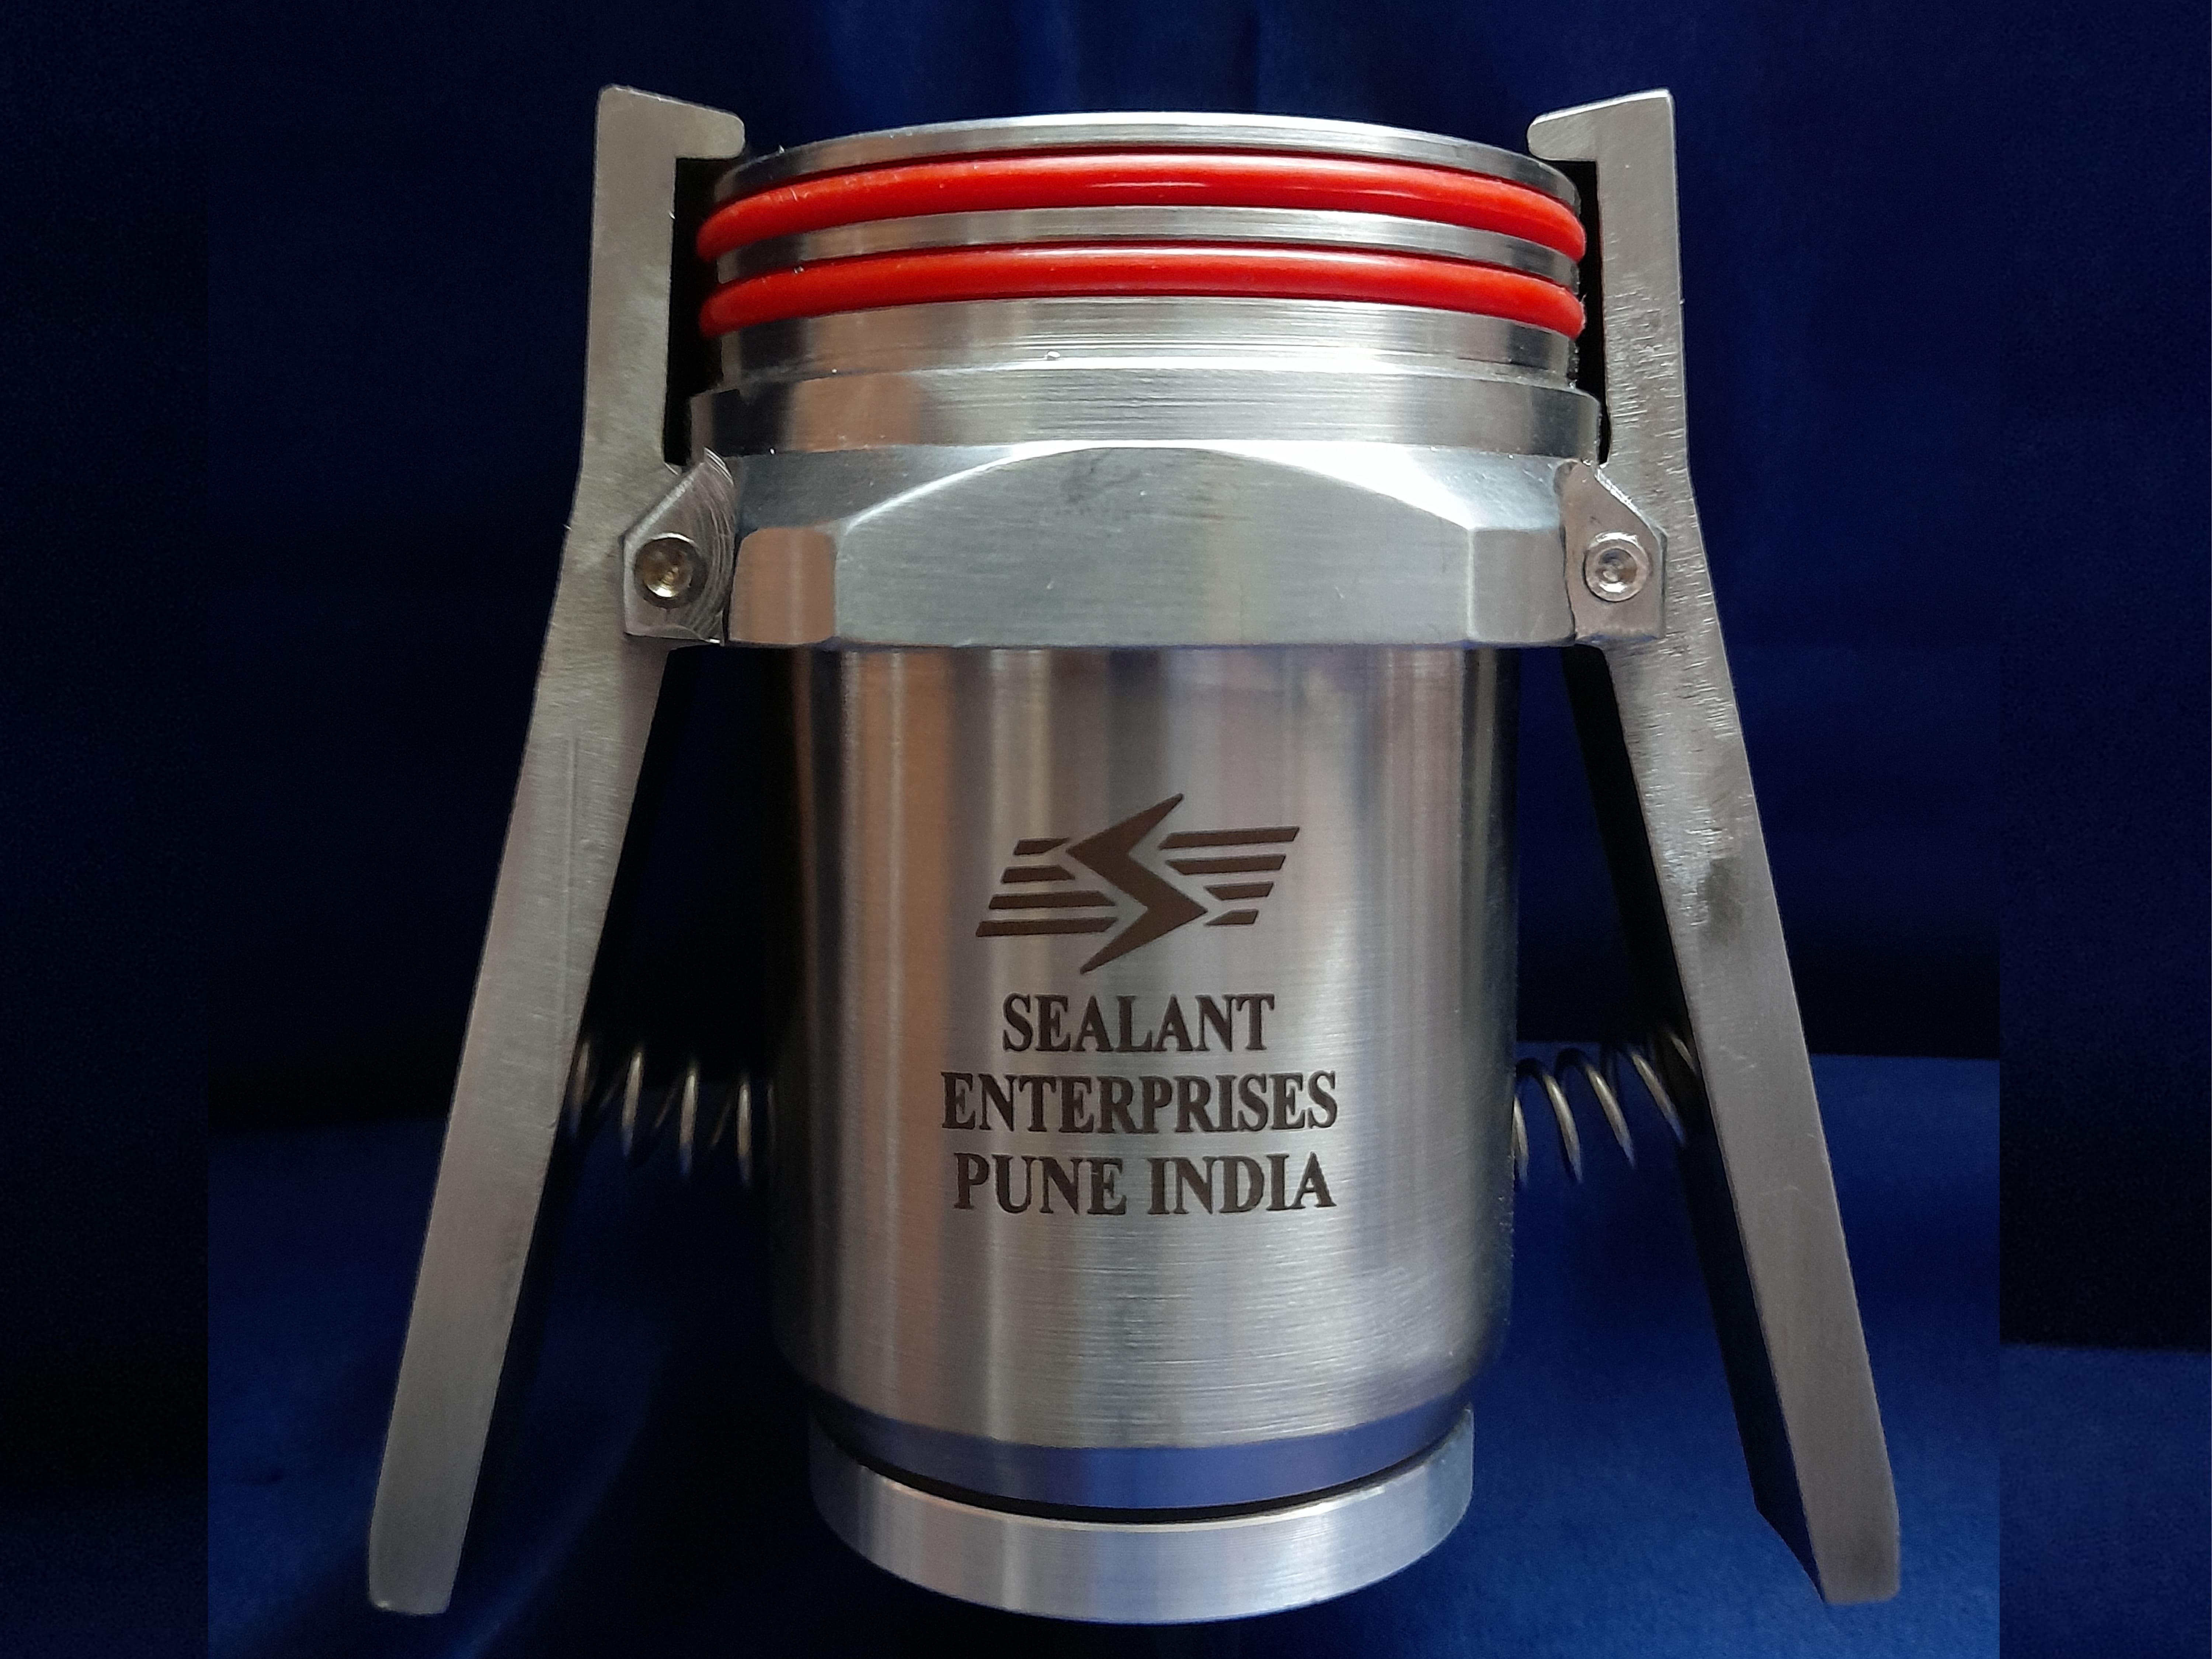 Sealant Enterprises